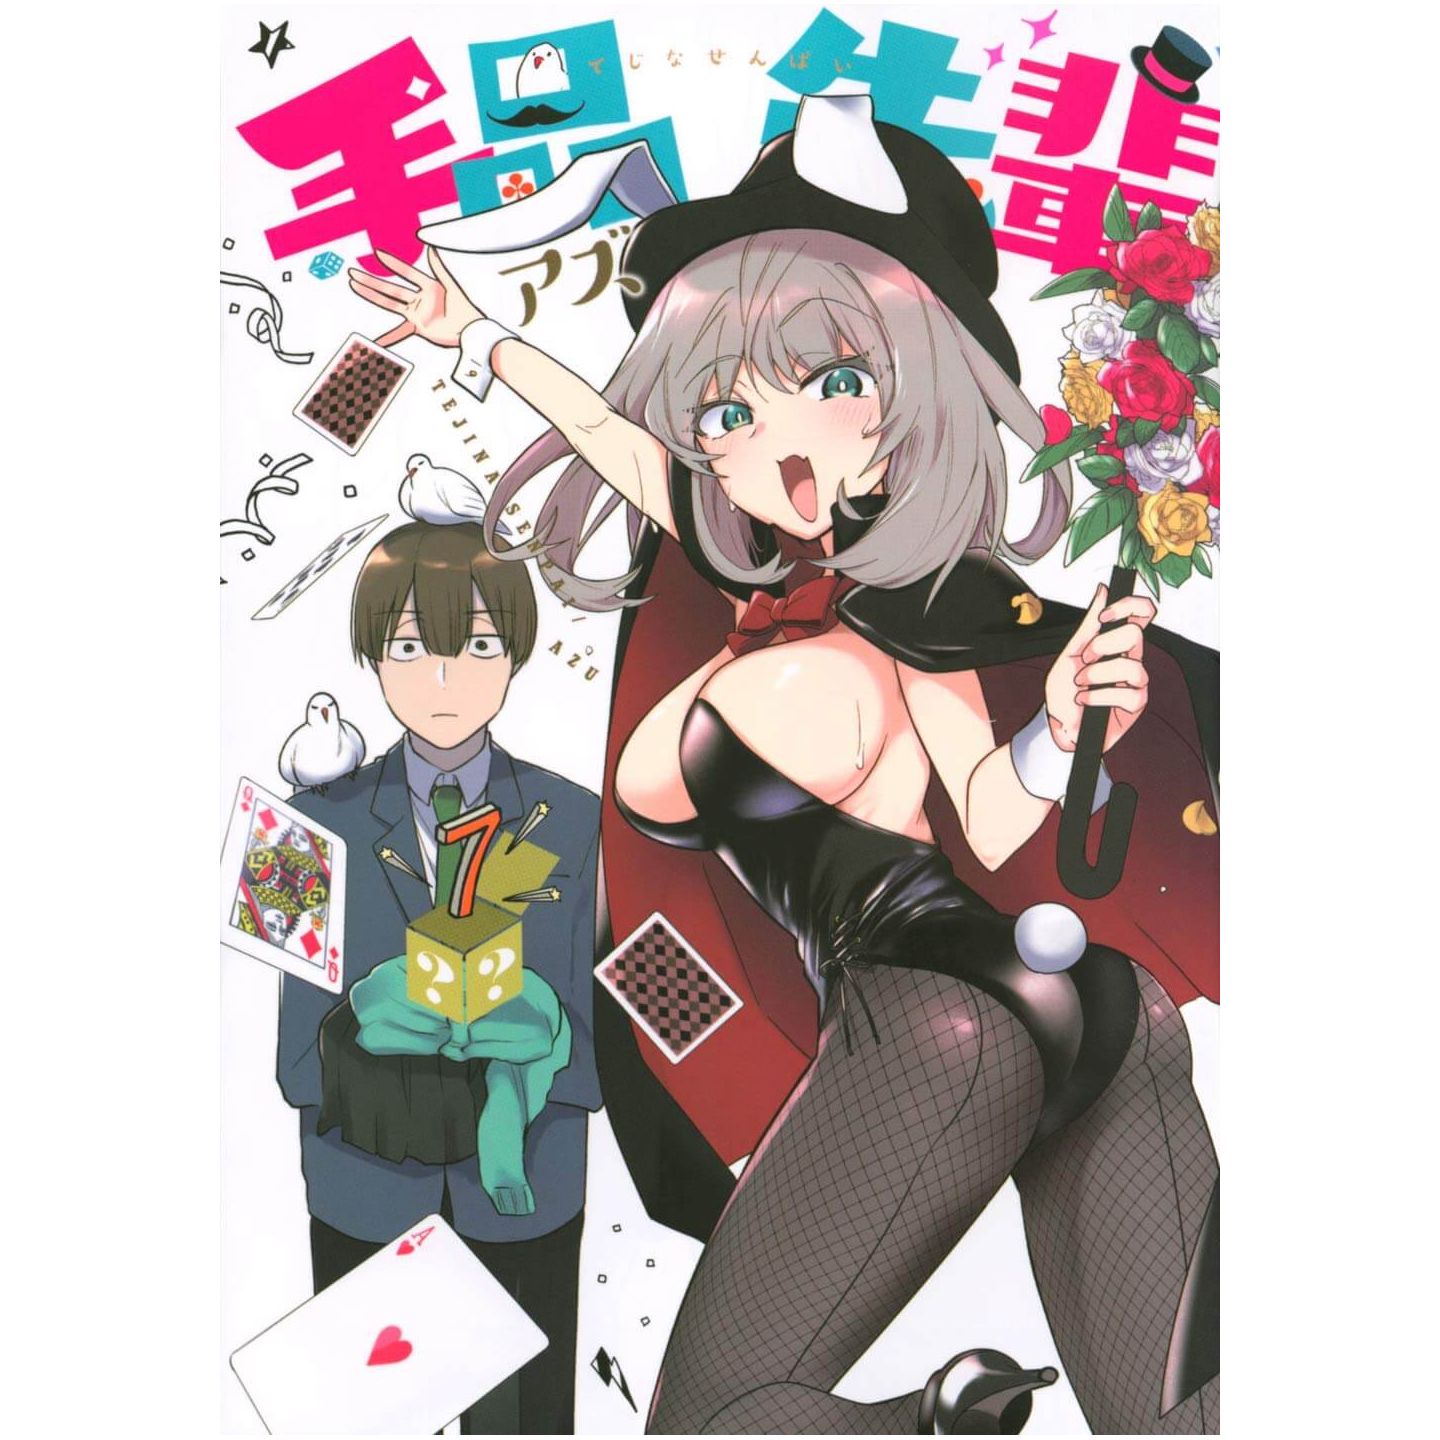 Magical Sempai Volume 4 (Tejina-senpai) - Manga Store 